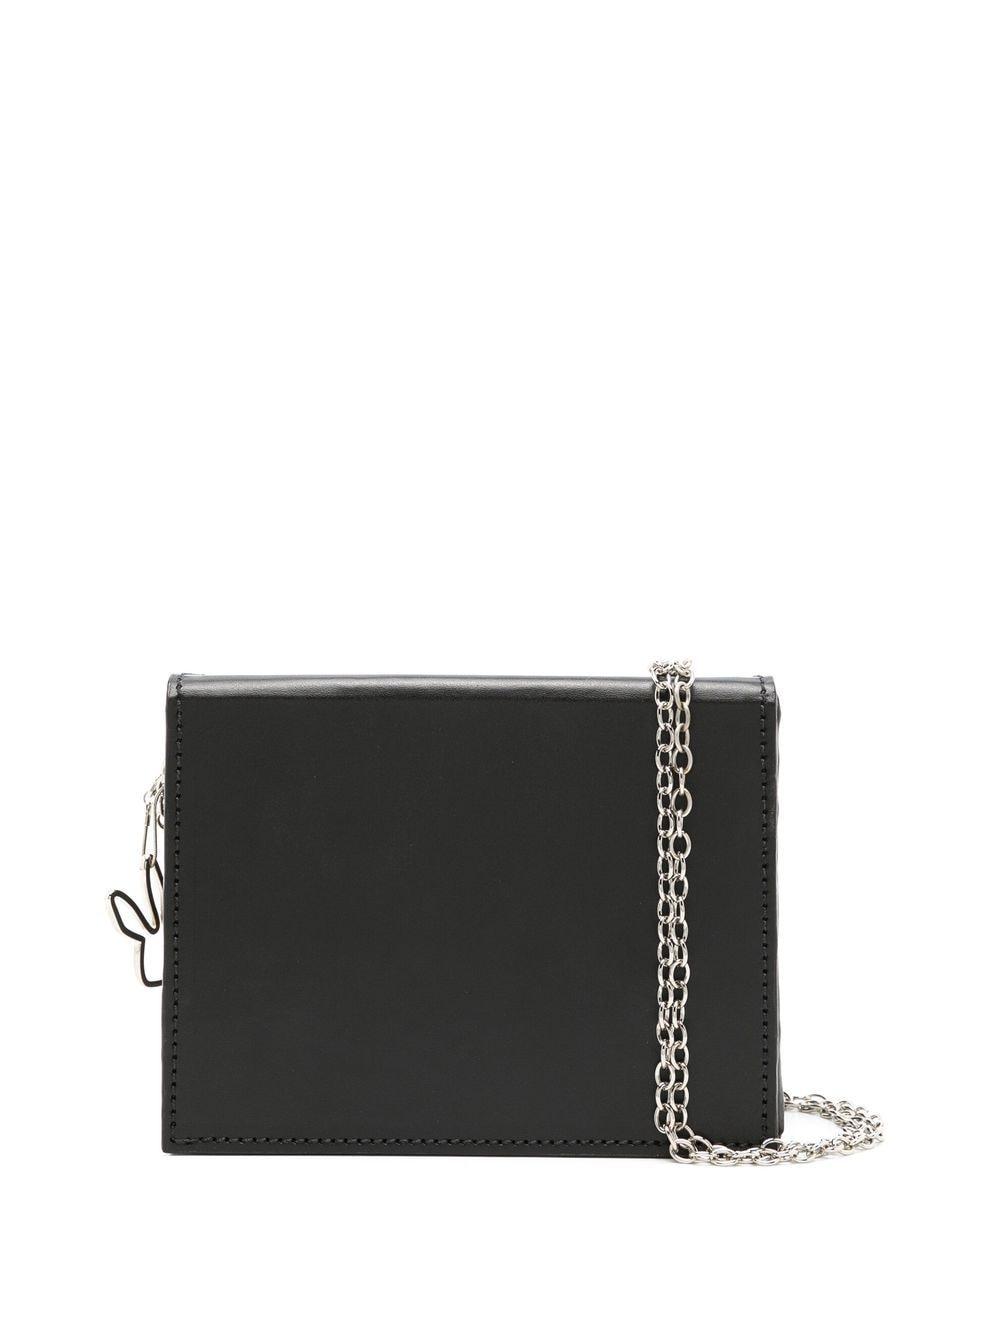 Gloria Coelho Chain-link Box Crossbody Bag in Black | Lyst